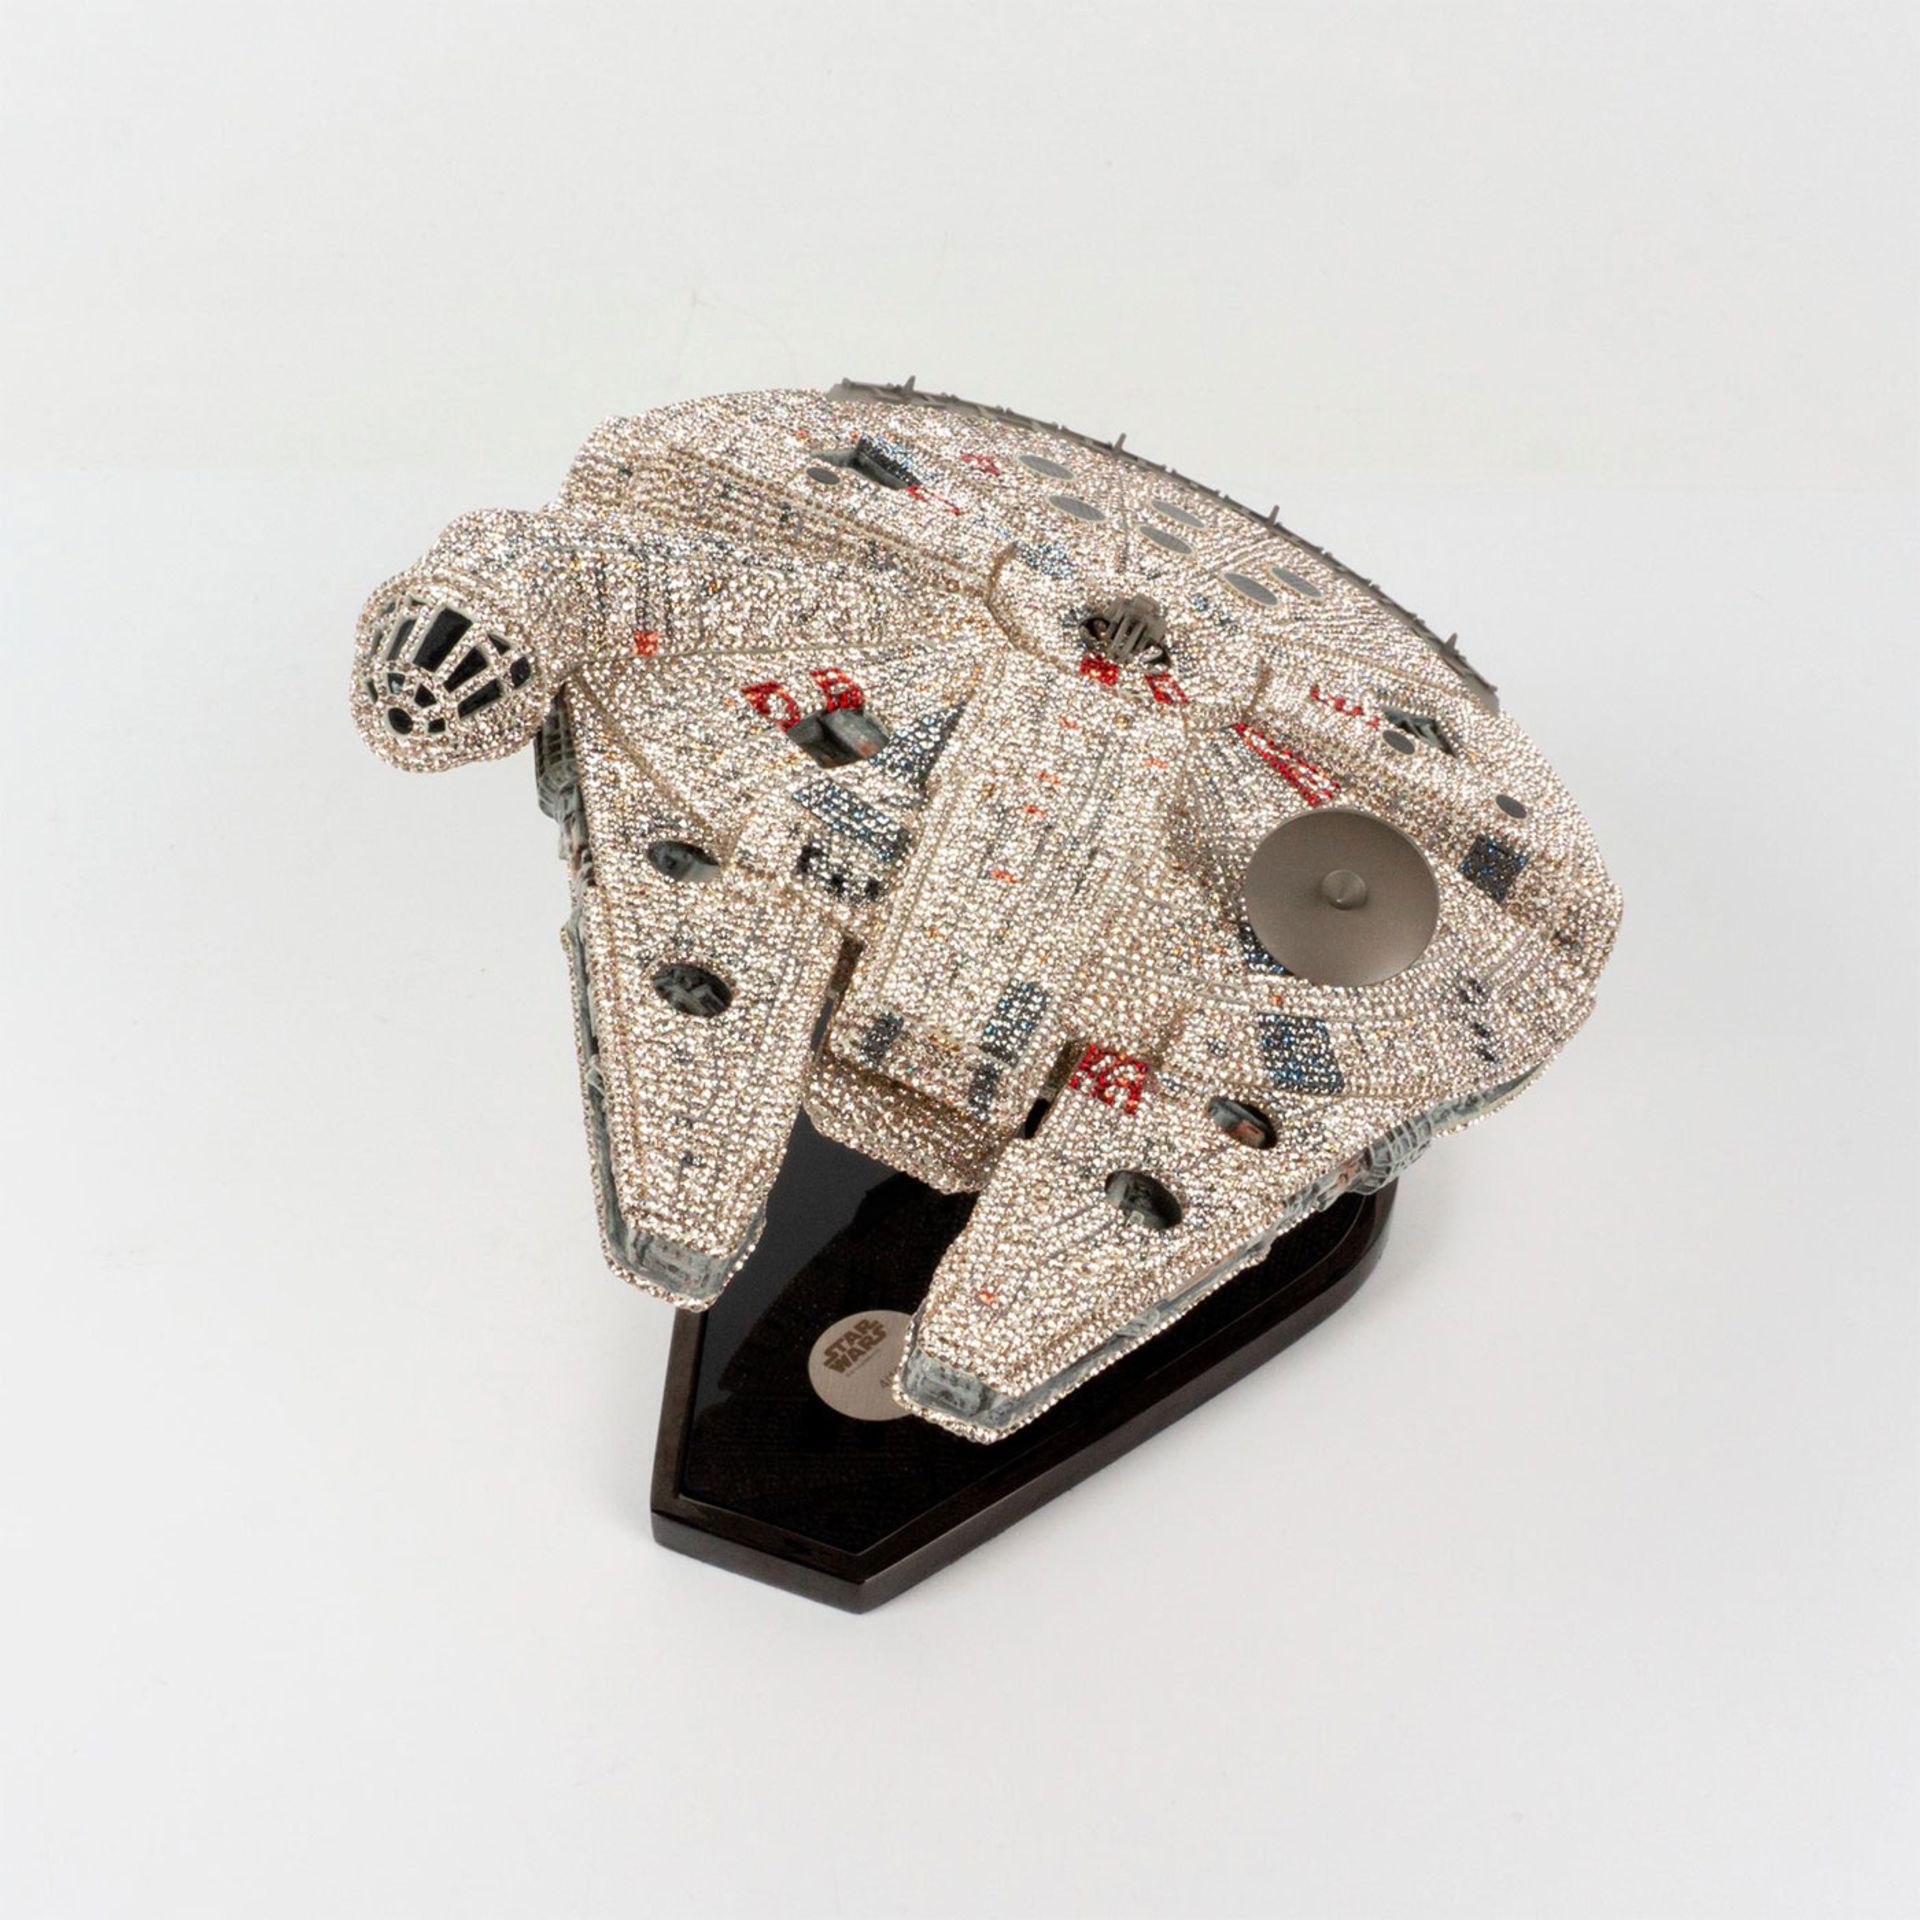 Swarovski Crystal Sculpture, Star Wars Millennium Falcon - Image 3 of 8